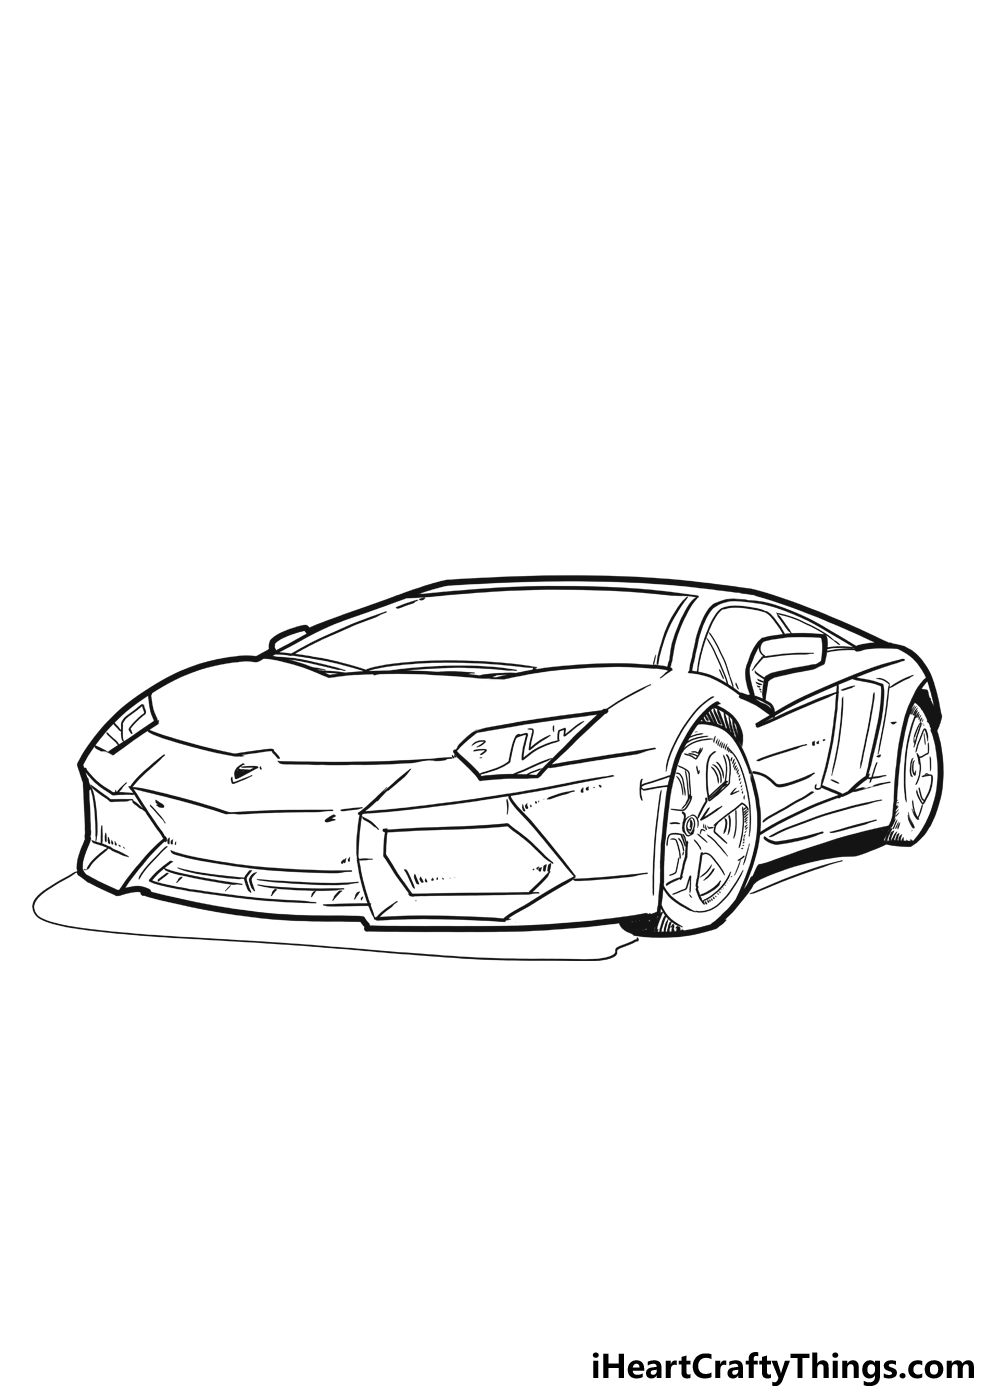 How to Draw A Lamborghini step 5